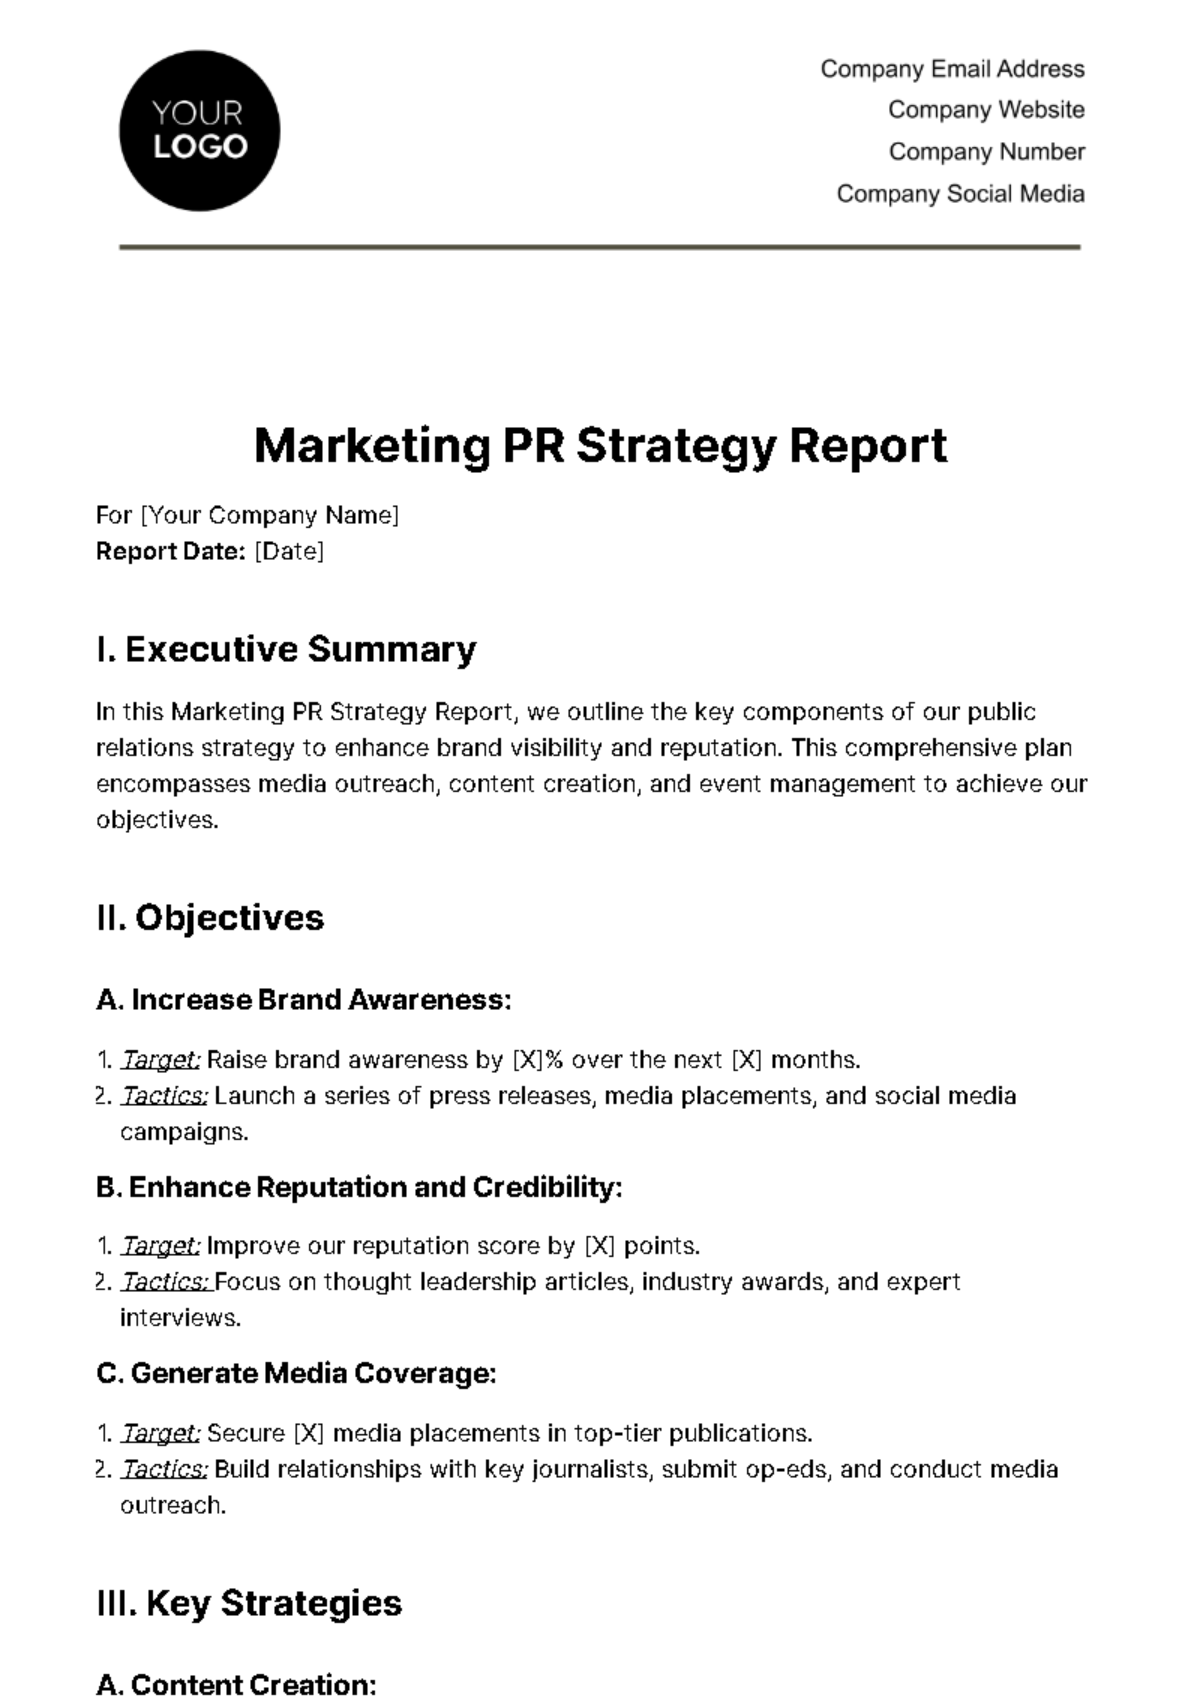 Free Marketing PR Strategy Report Template